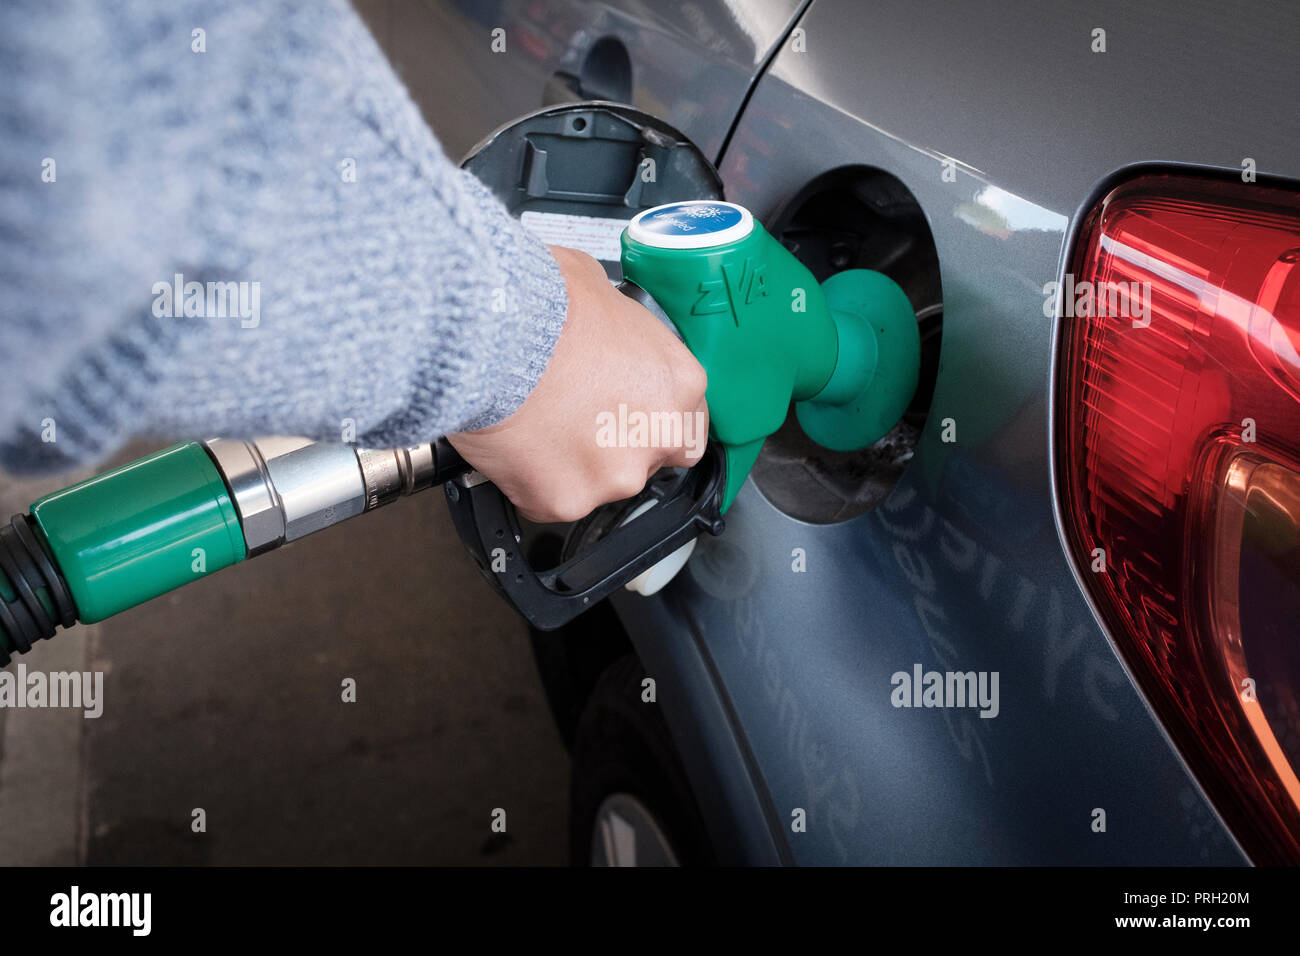 London,UK-Filling the car tank at petrol station Stock Photo